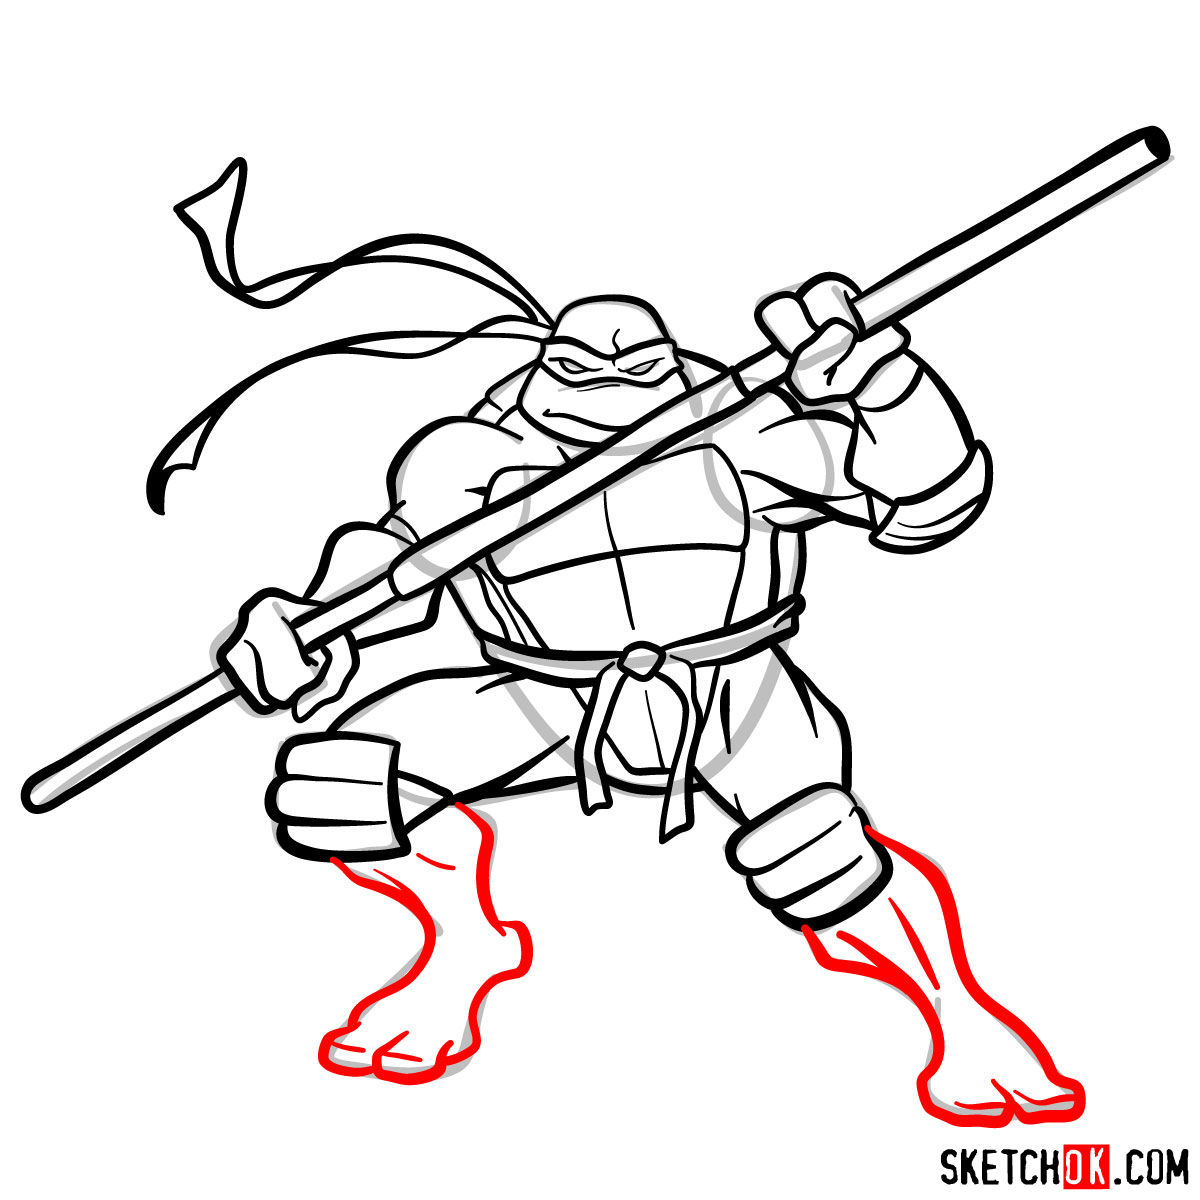 How to draw Donatello ninja turtle - step 13